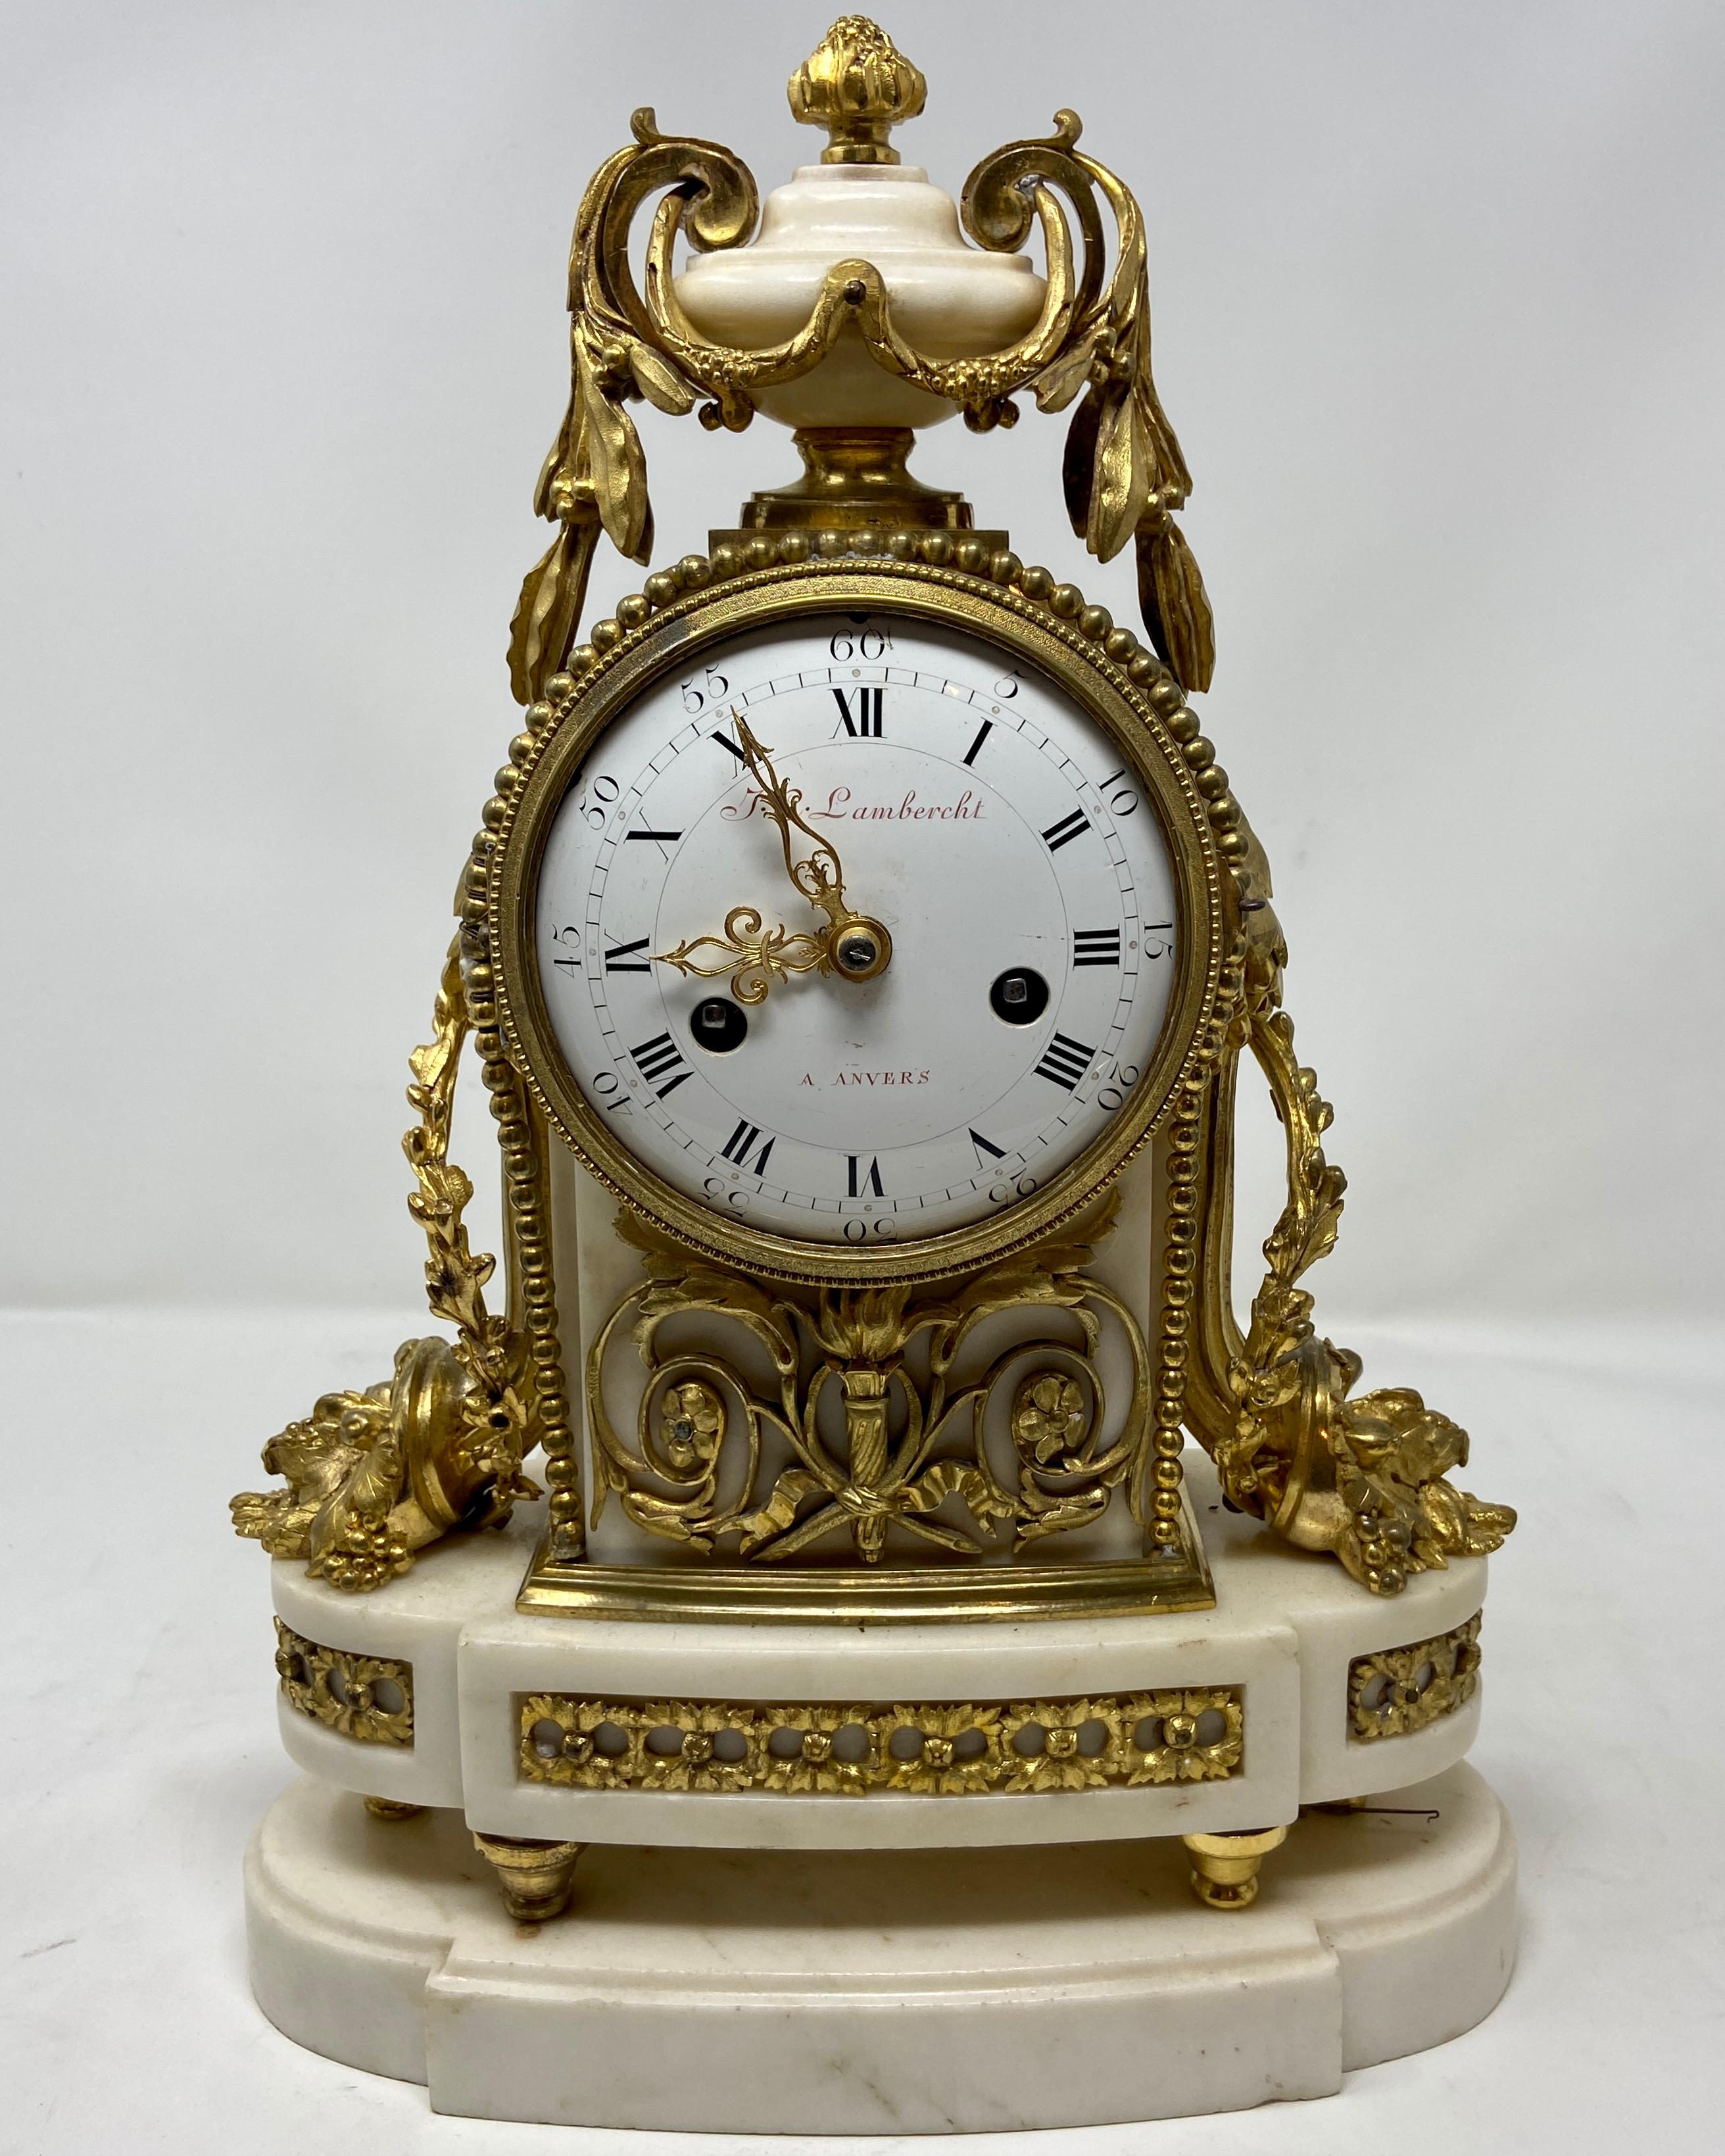 Antique French Louis XVI white marble & gold bronze 3 piece Garniture clock set.
Clock: 14